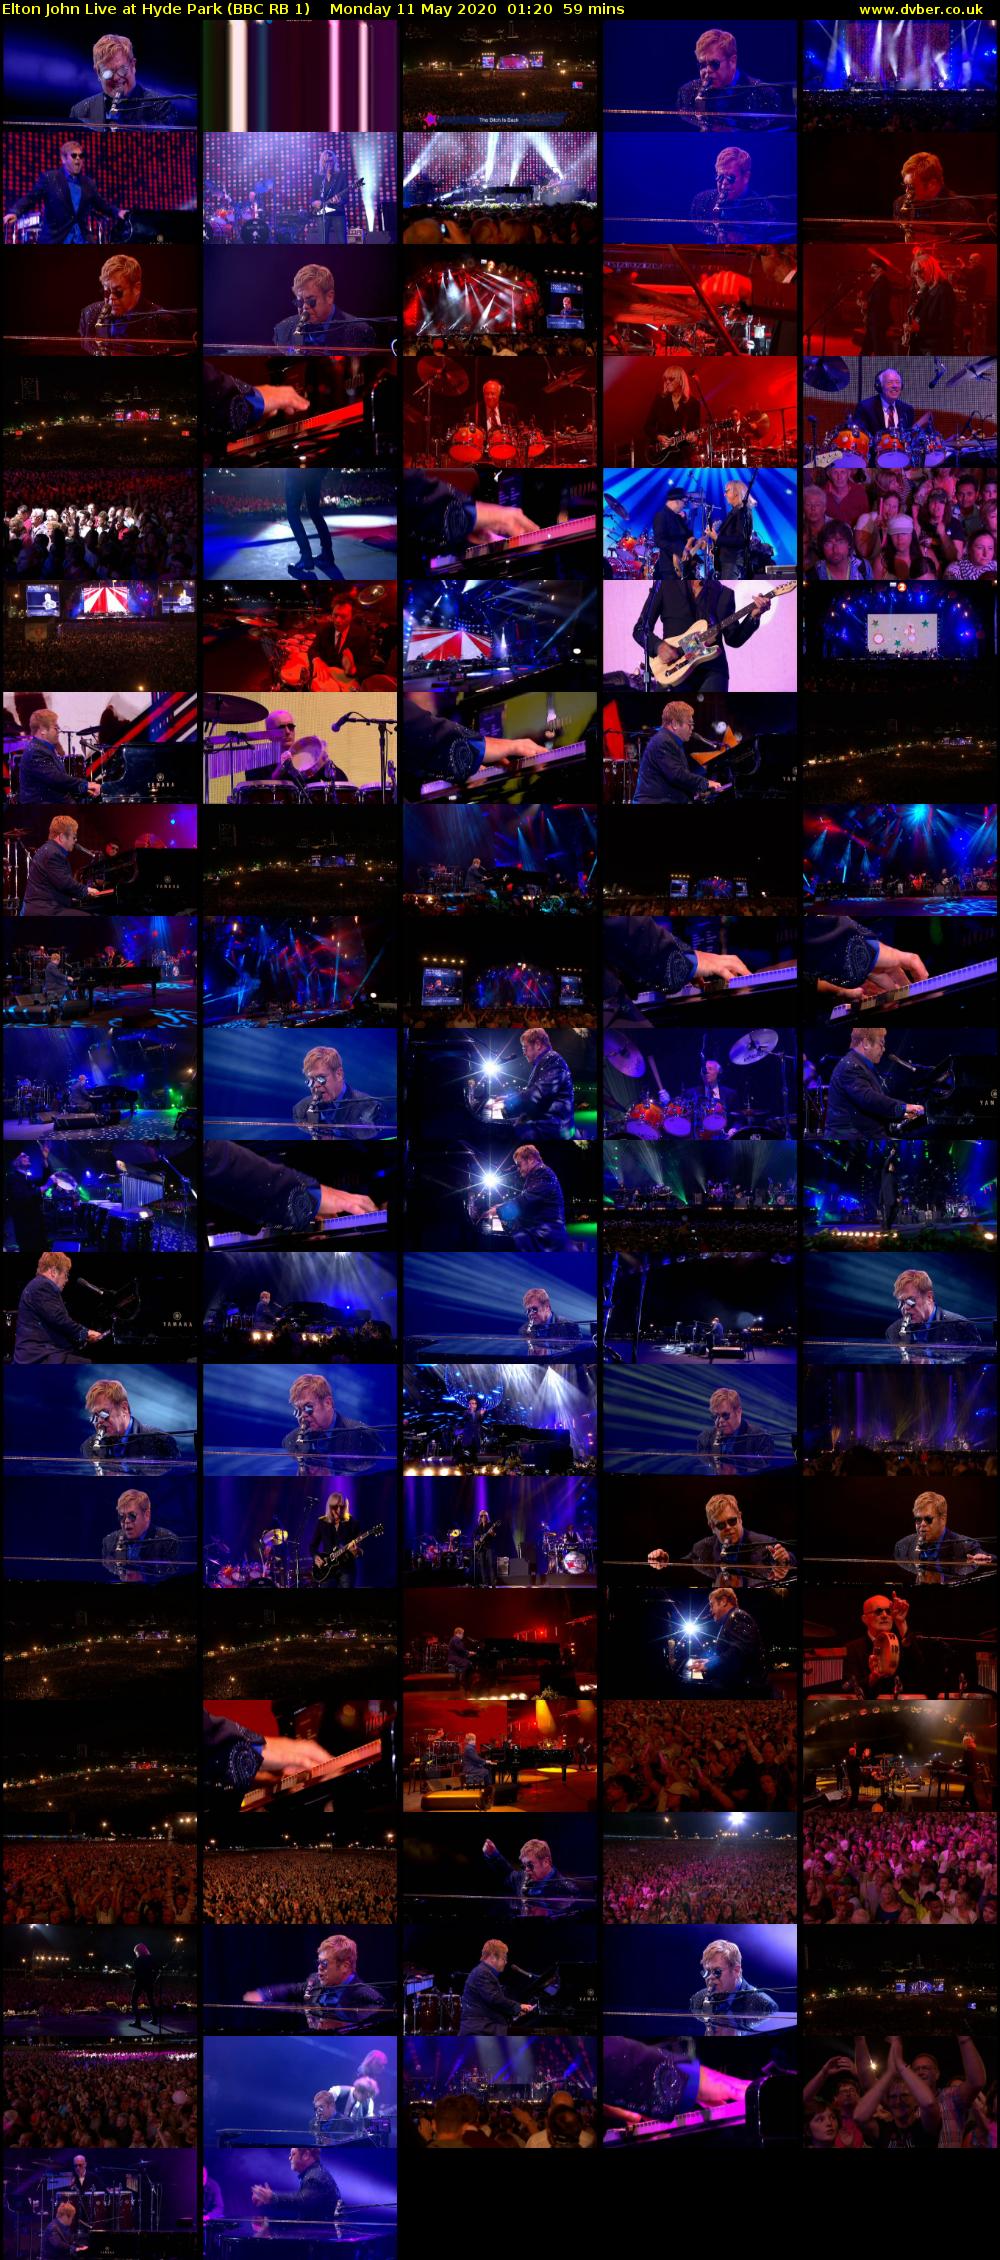 Elton John Live at Hyde Park (BBC RB 1) Monday 11 May 2020 01:20 - 02:19